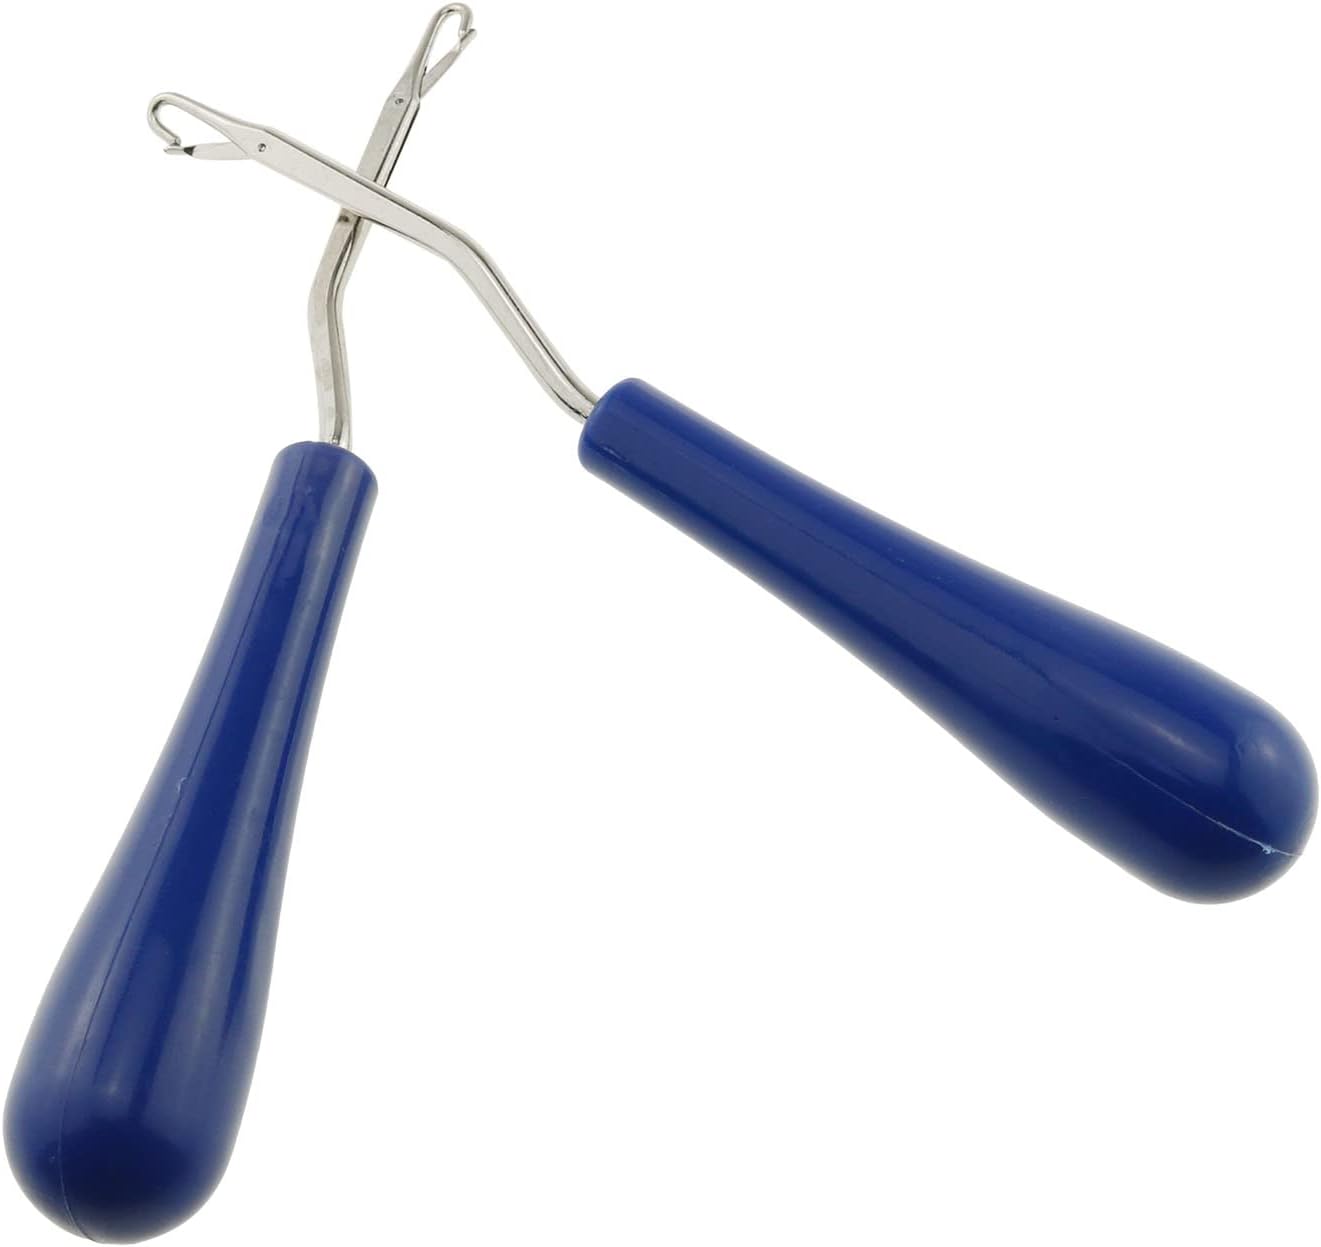 Крючок для вытягивания нити - Инструмент для вытягивания нити на кончике крючка.